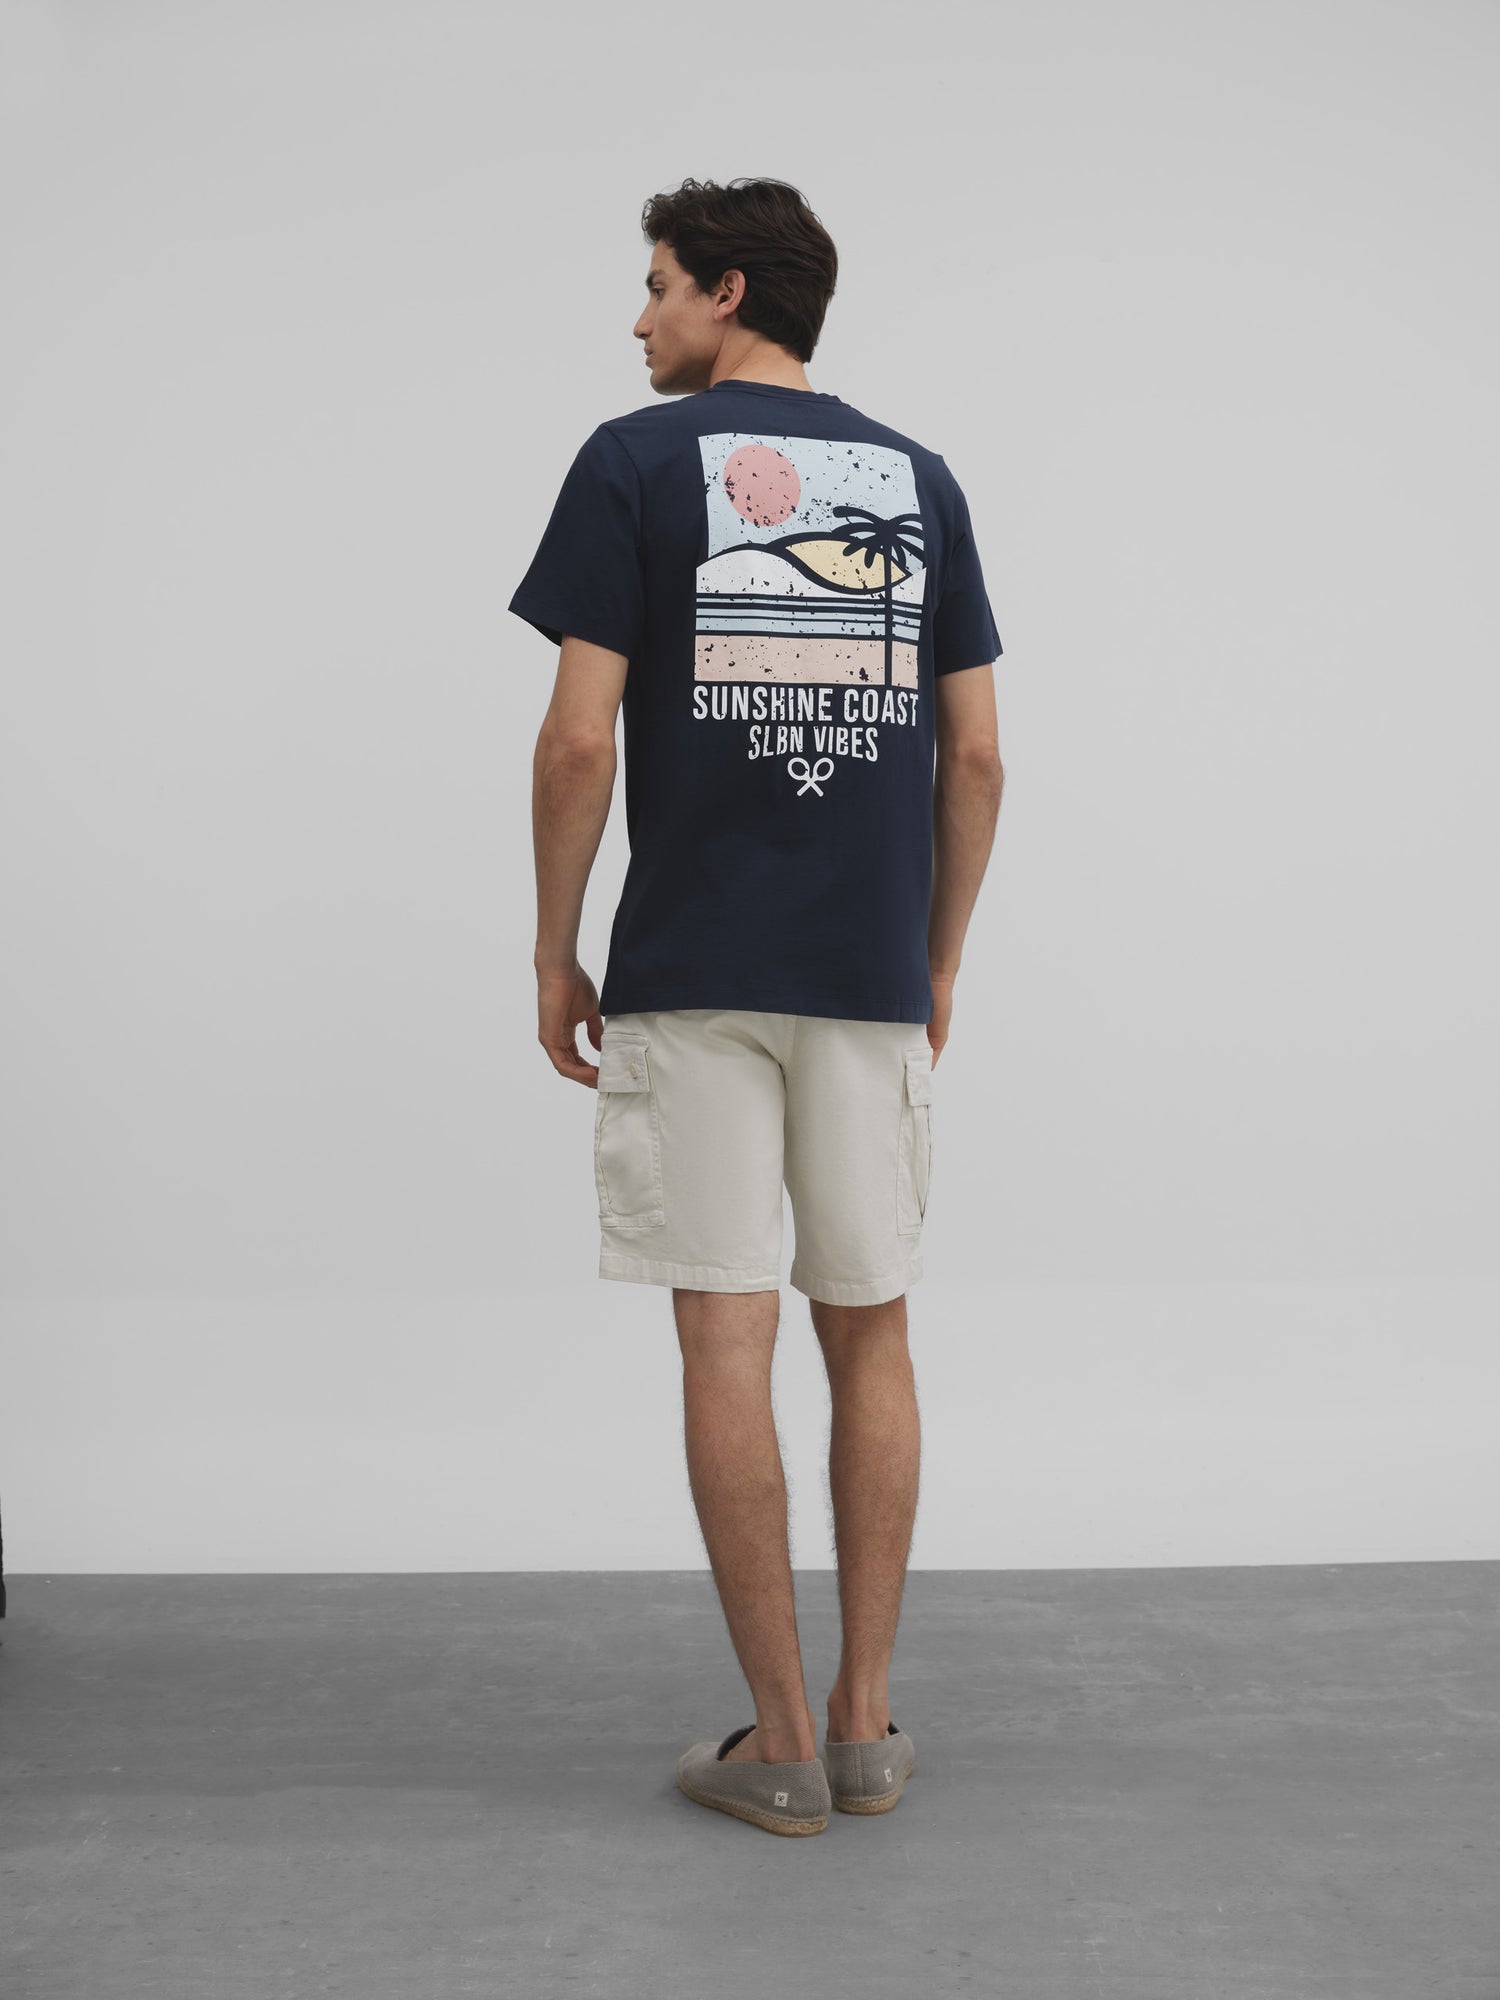 Navy blue sunshine coast t-shirt